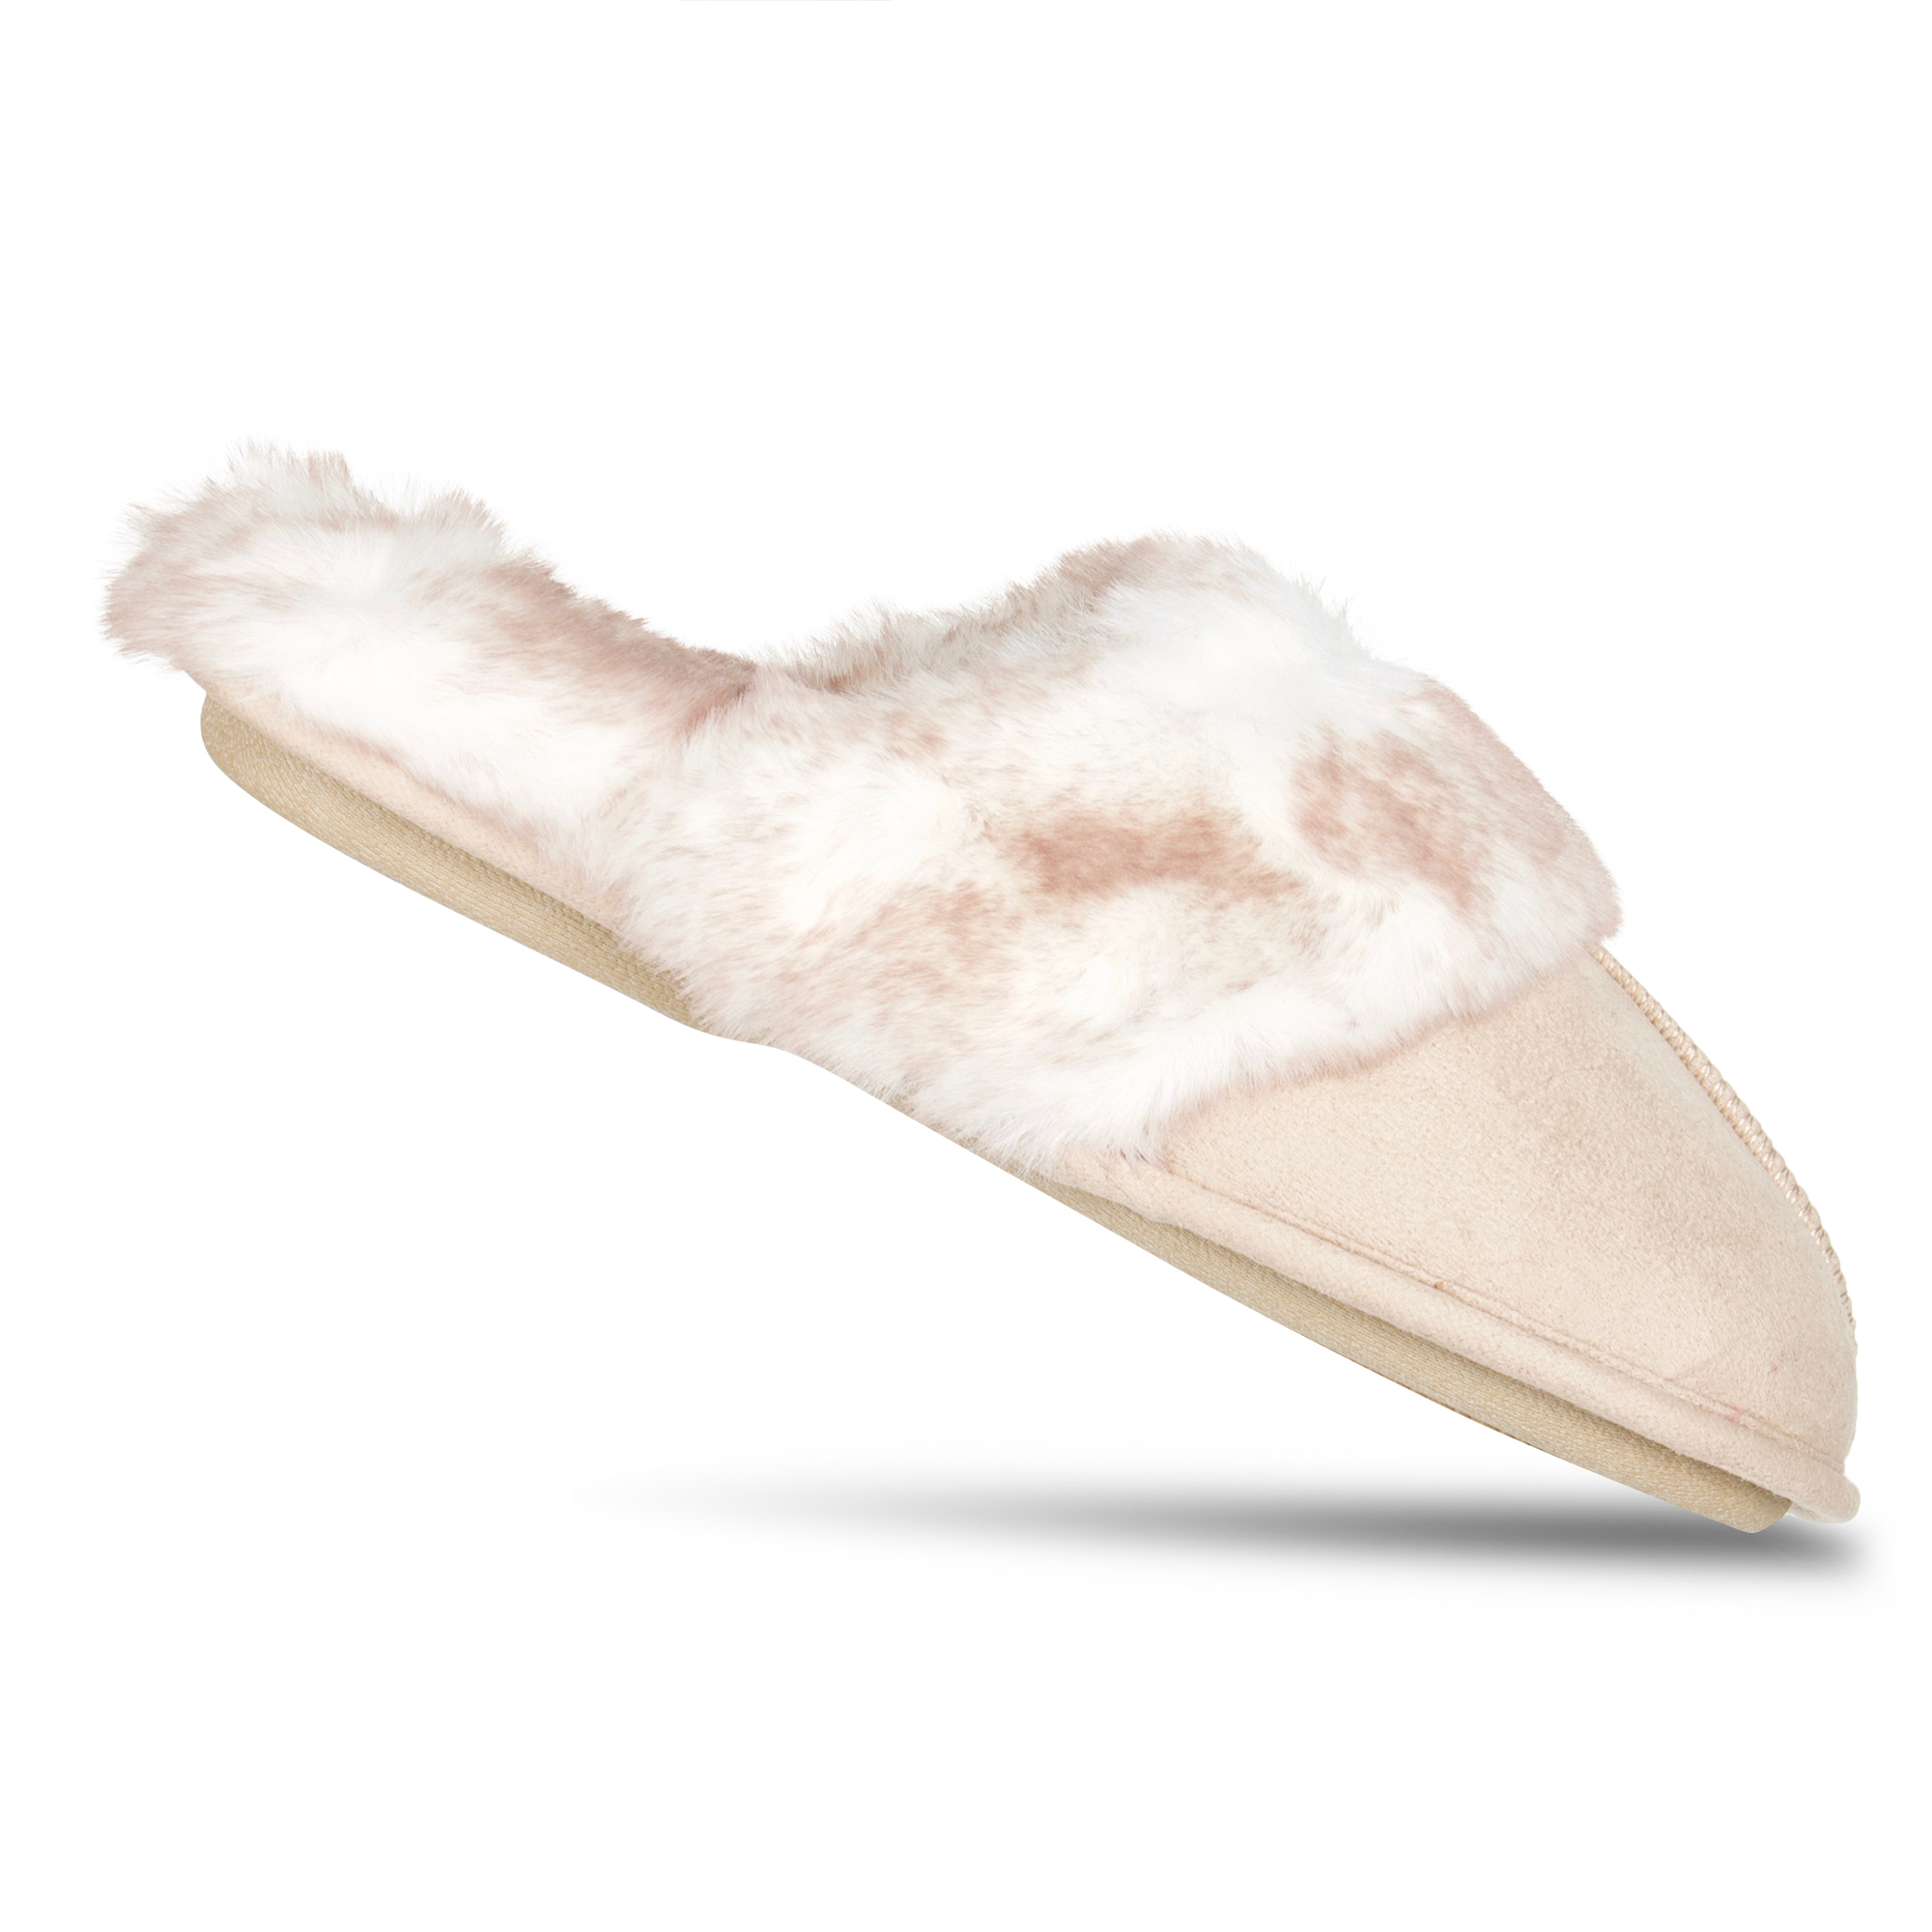 Jessica Simpson Comfy Faux Fur Womens House Slipper Scuff Memory Foam Slip On Anti-Skid Sole - image 7 of 9